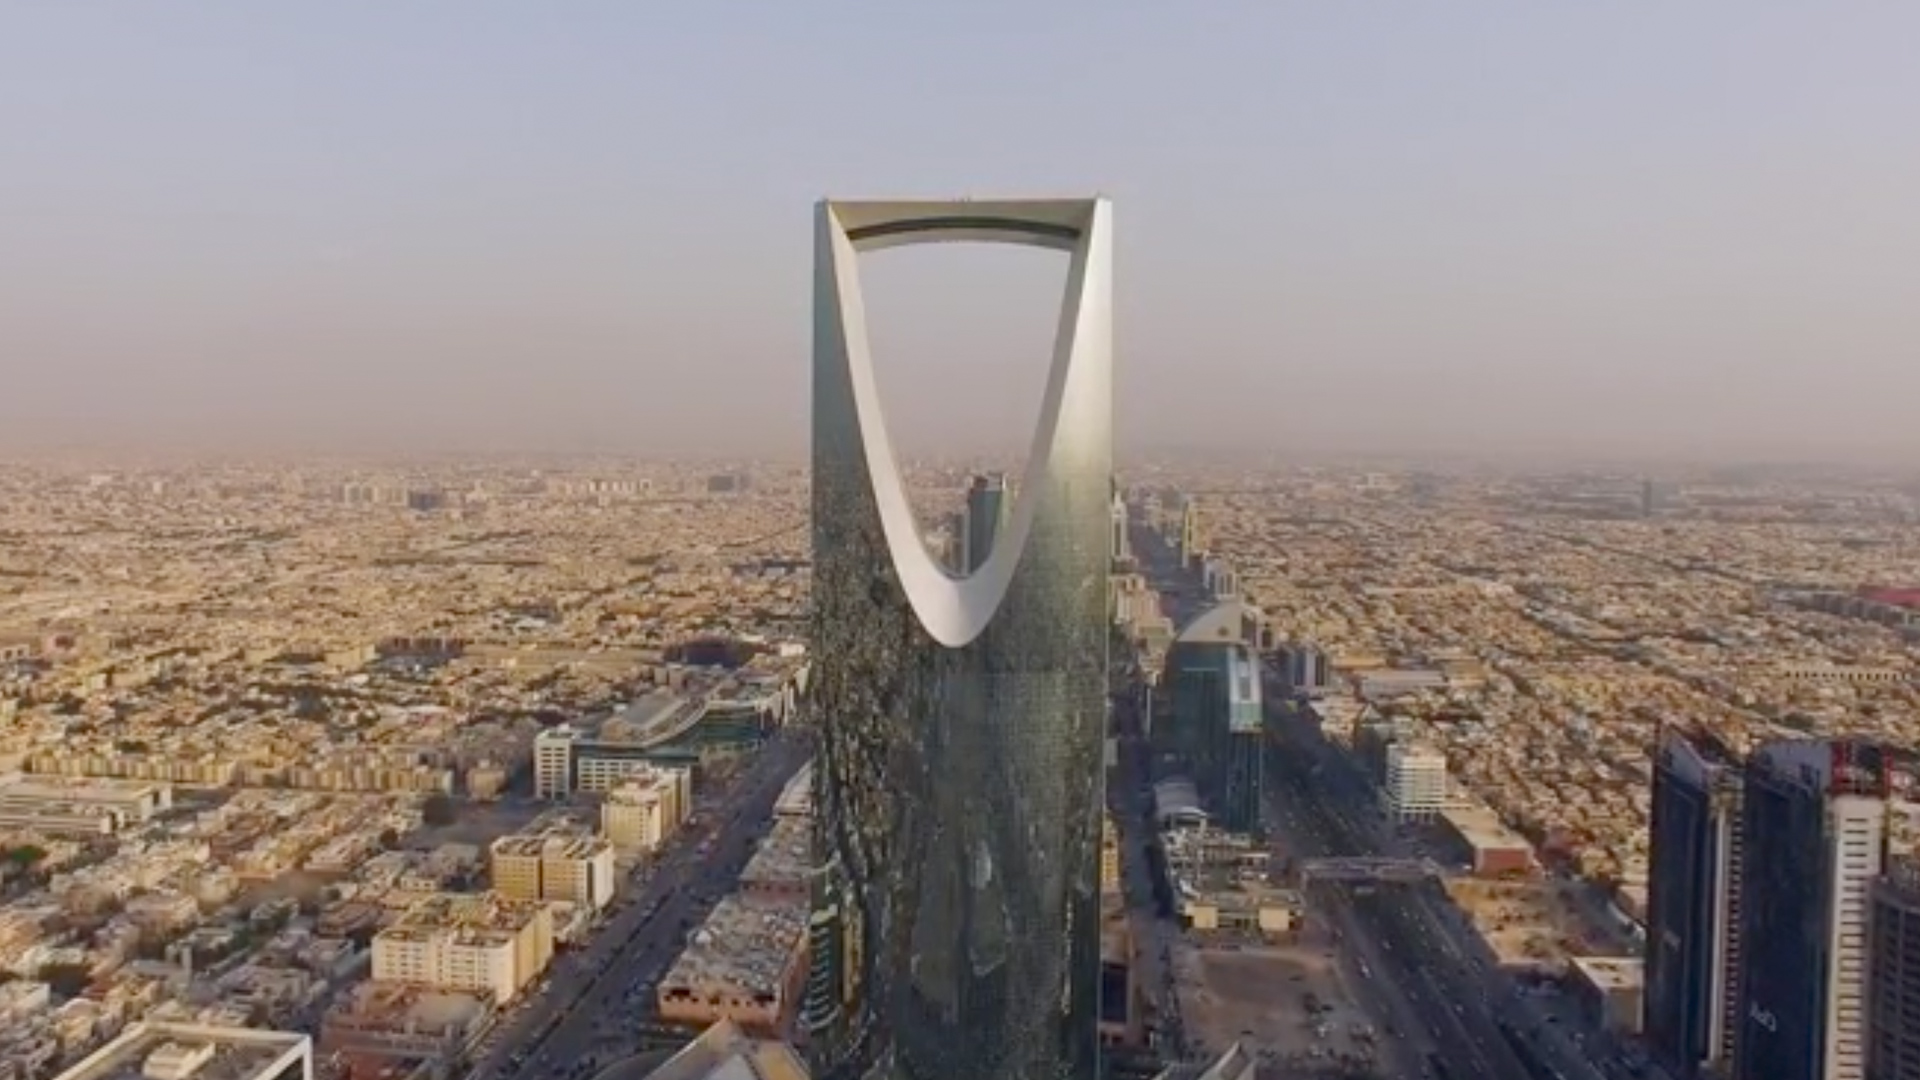 saudi arabian architecture